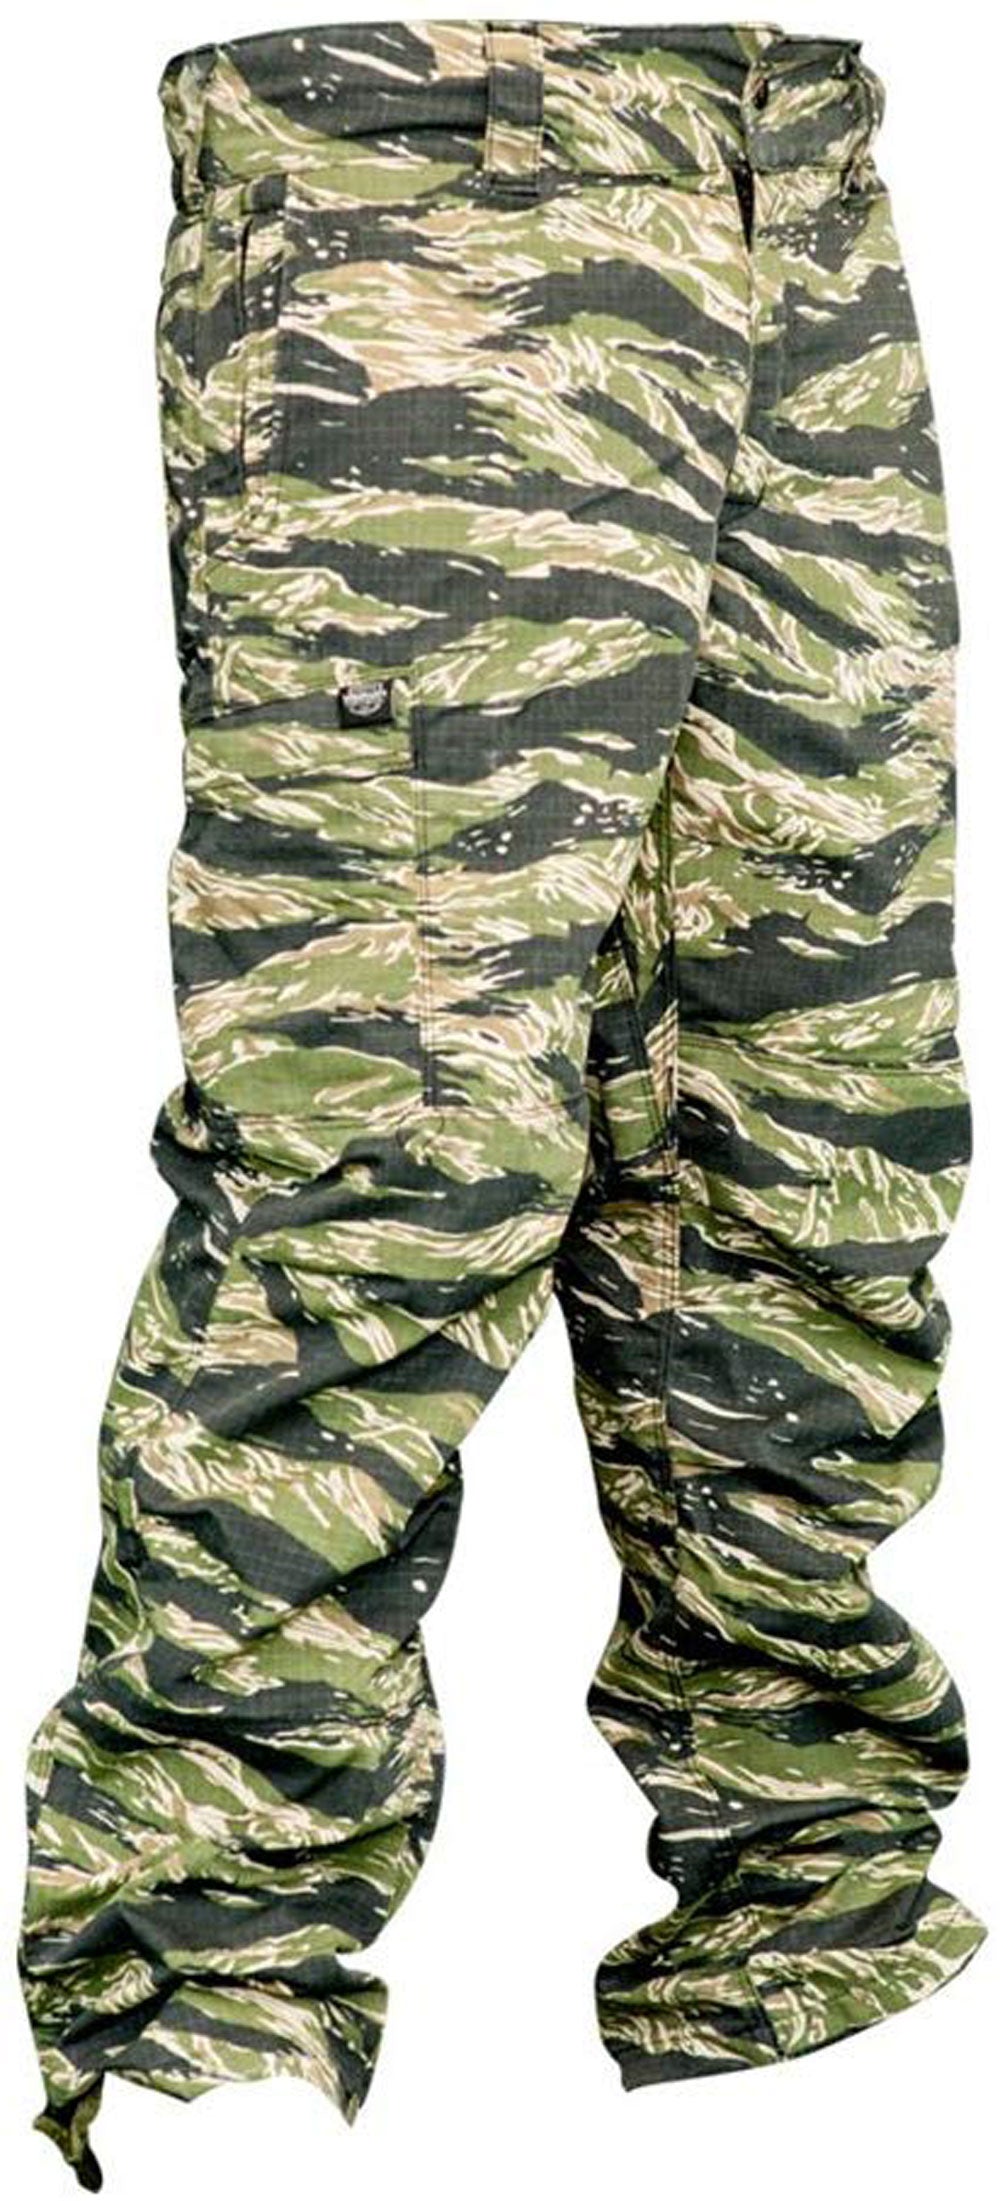 Valken V-Tac Kilo Paintball Pants Tiger Stripe Camo - X-Large - Valken